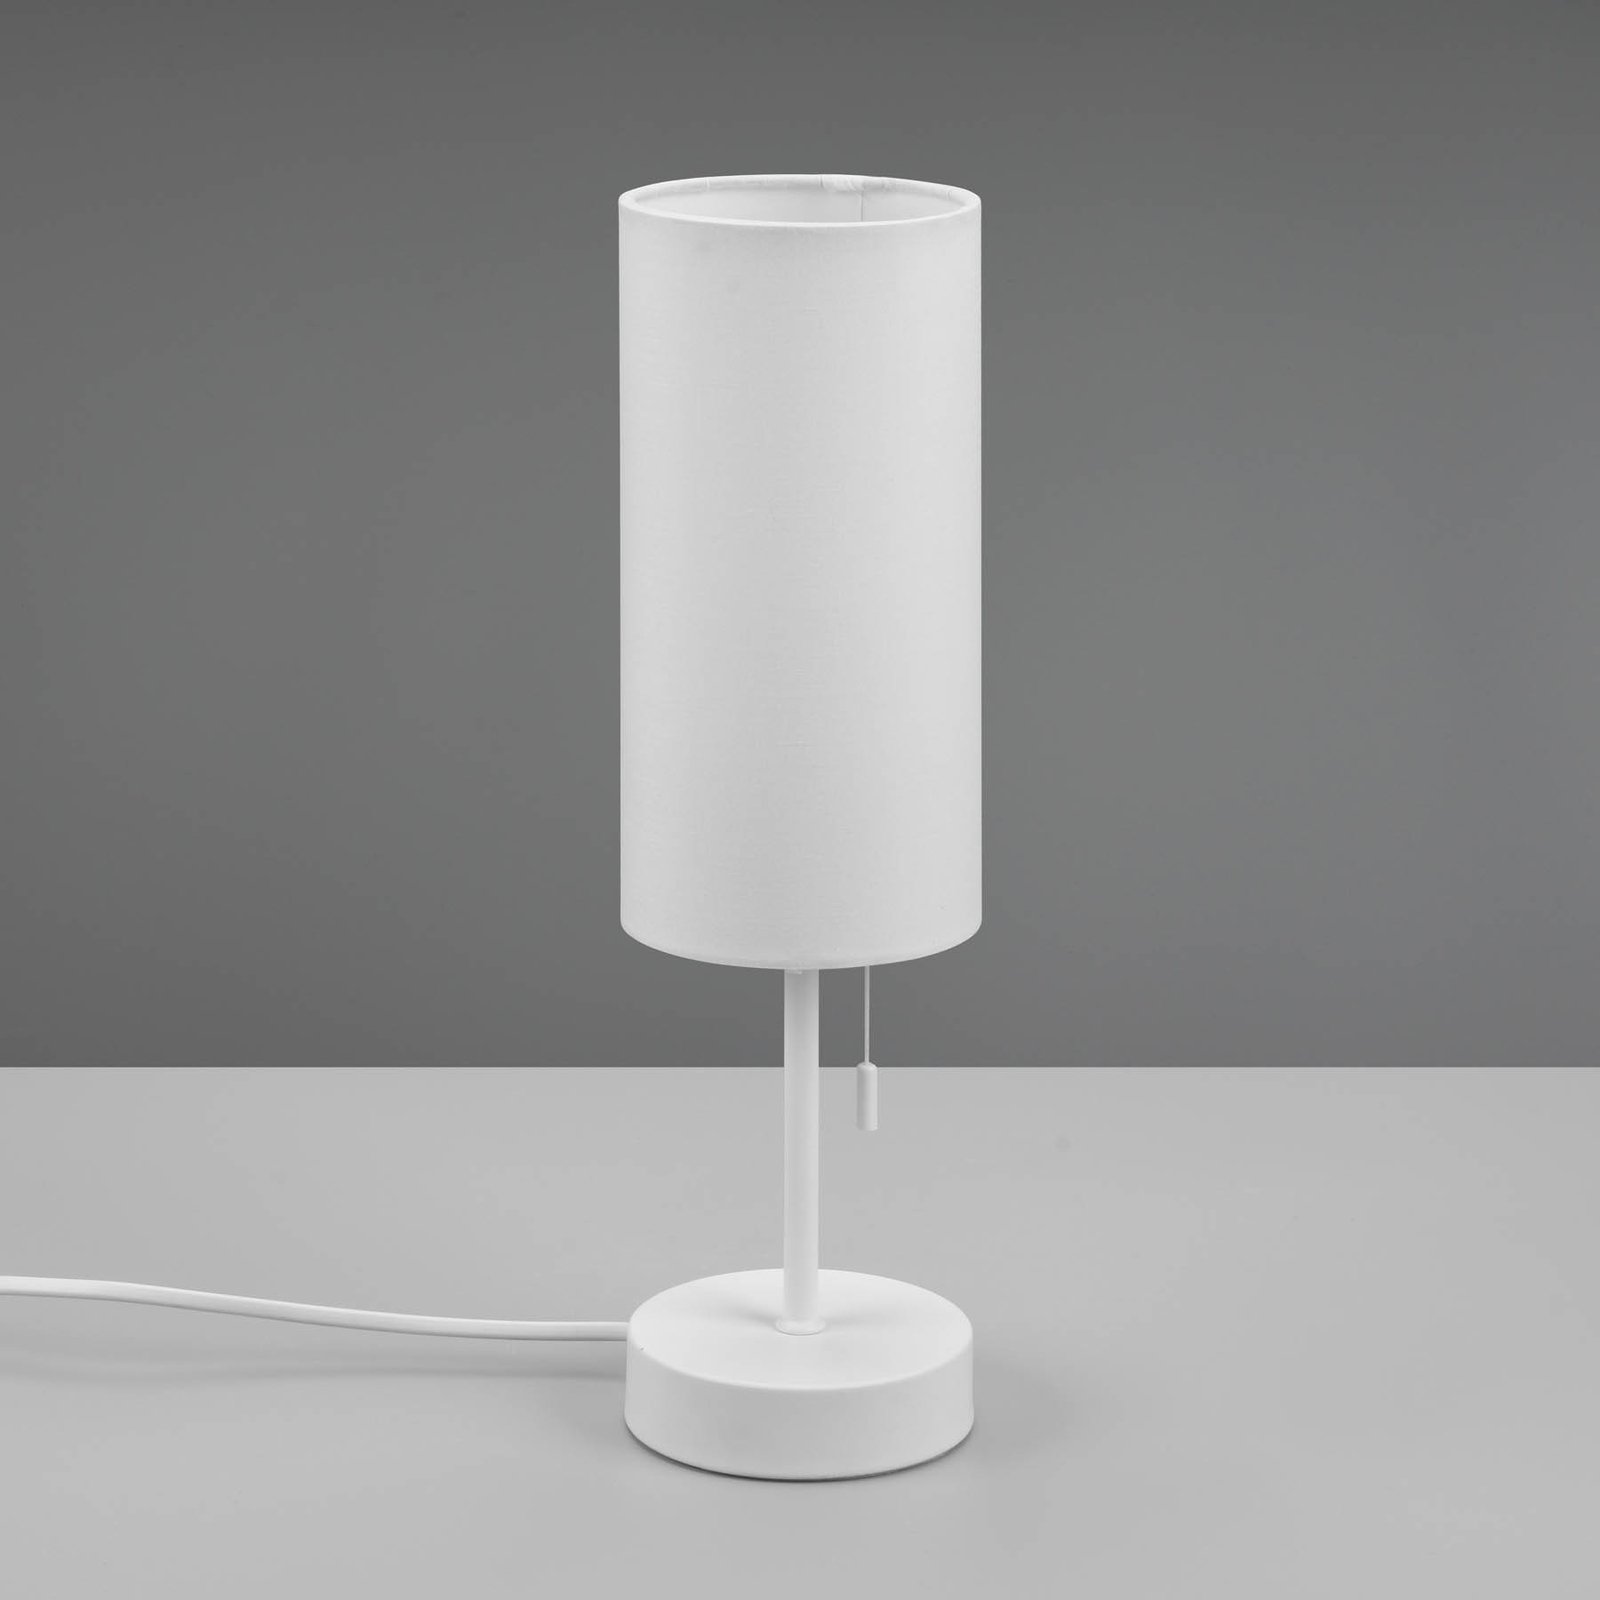 Lampe à poser Jaro avec port USB, blanc/blanc